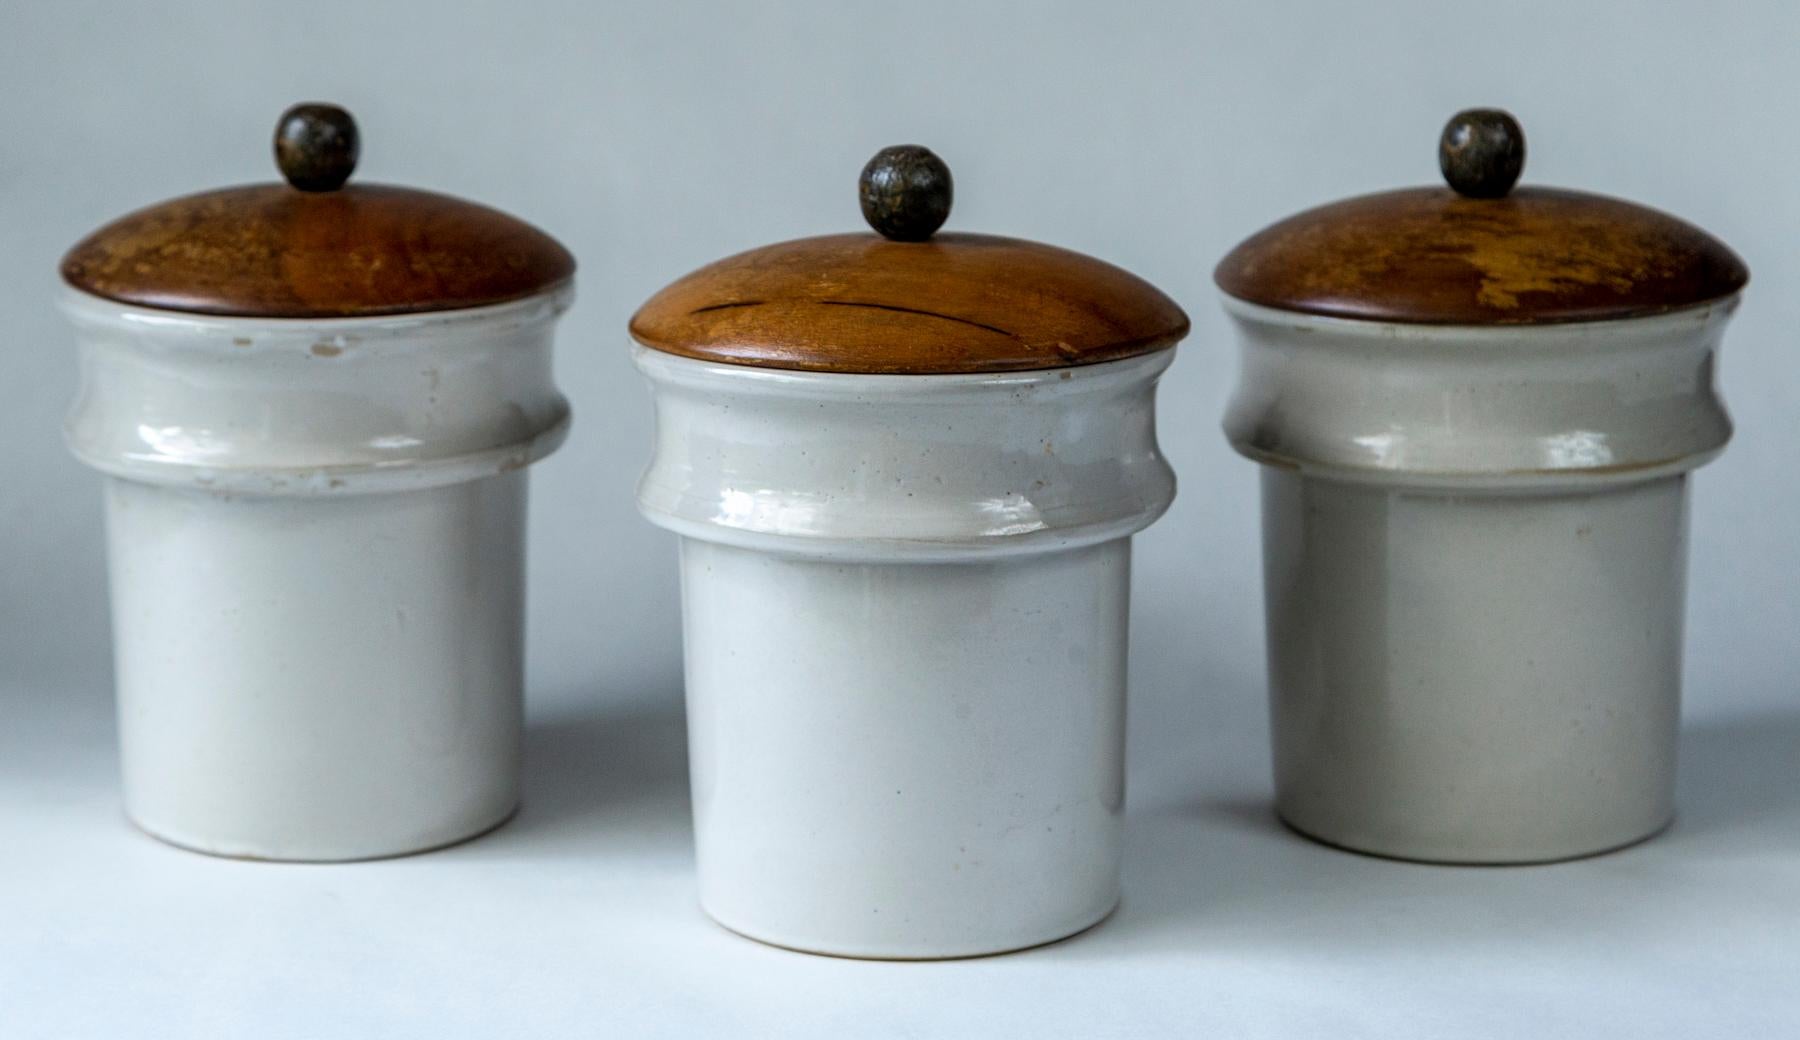 Set of three vintage ironstone apothecary jars, France, circa 1930. Wood lids cover heavy ironstone jars.